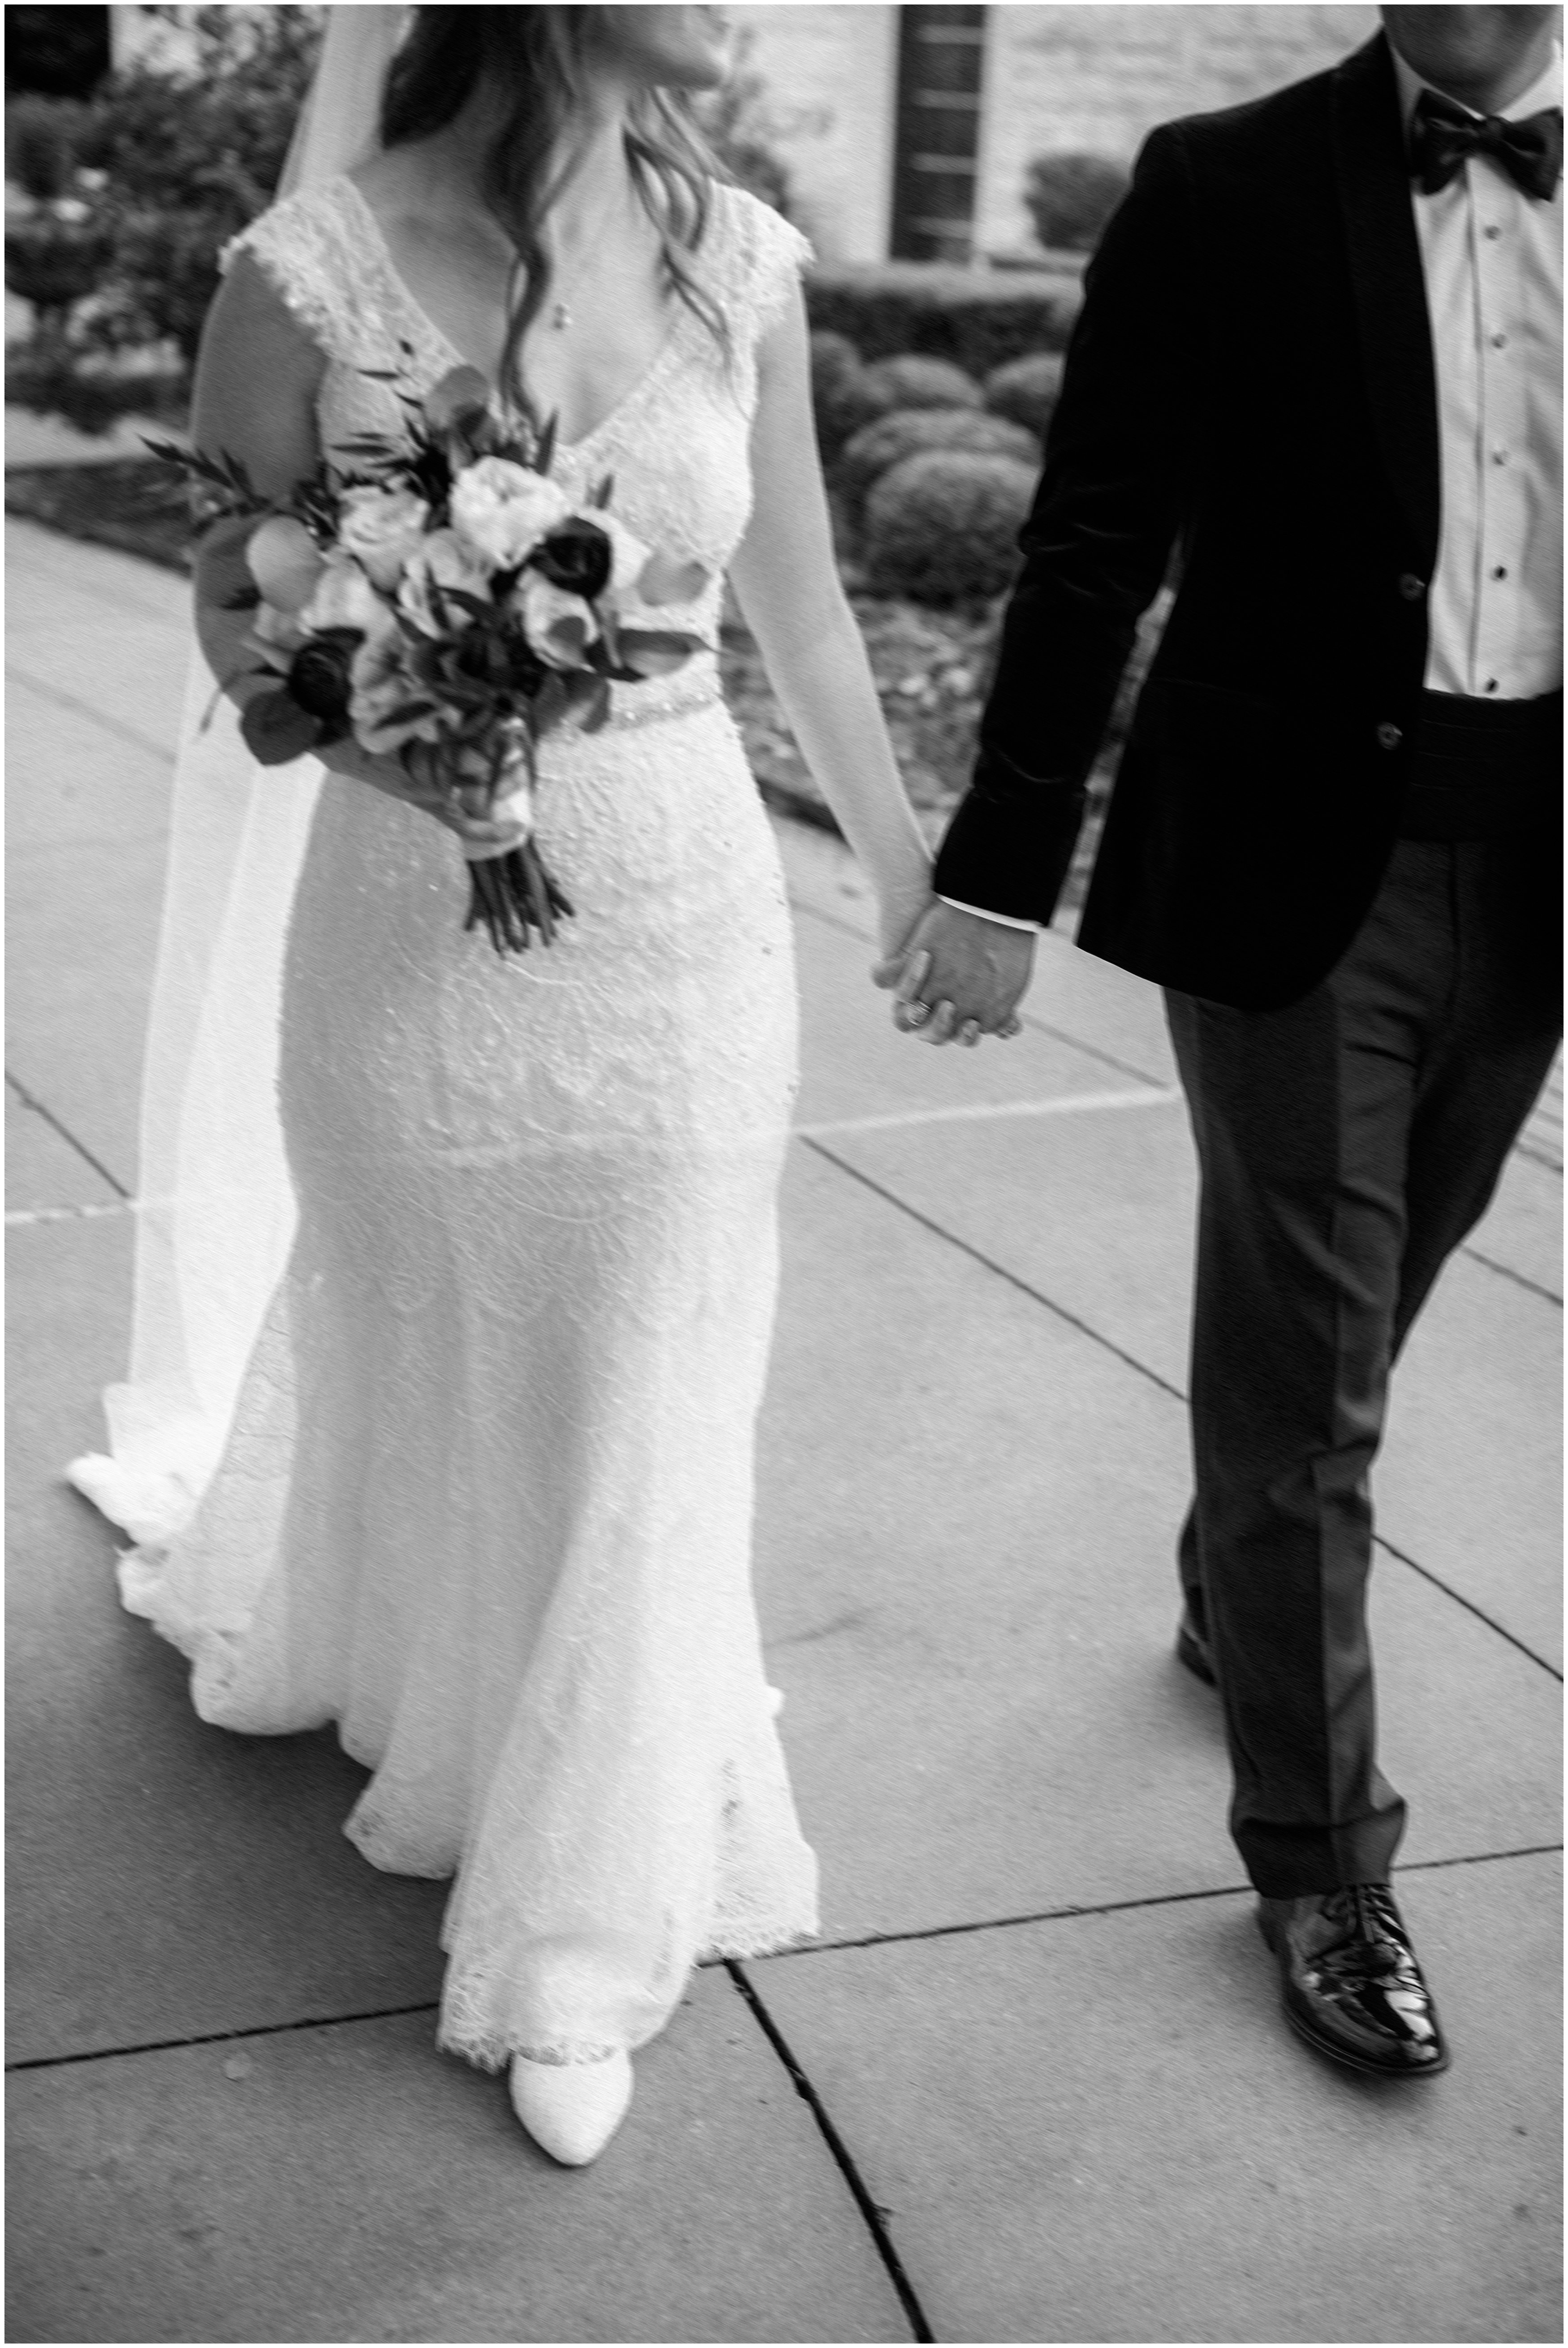 Ashton Gardens Wedding, Bride and Groom, Black and white wedding photos, Leah Goetzel Photography

